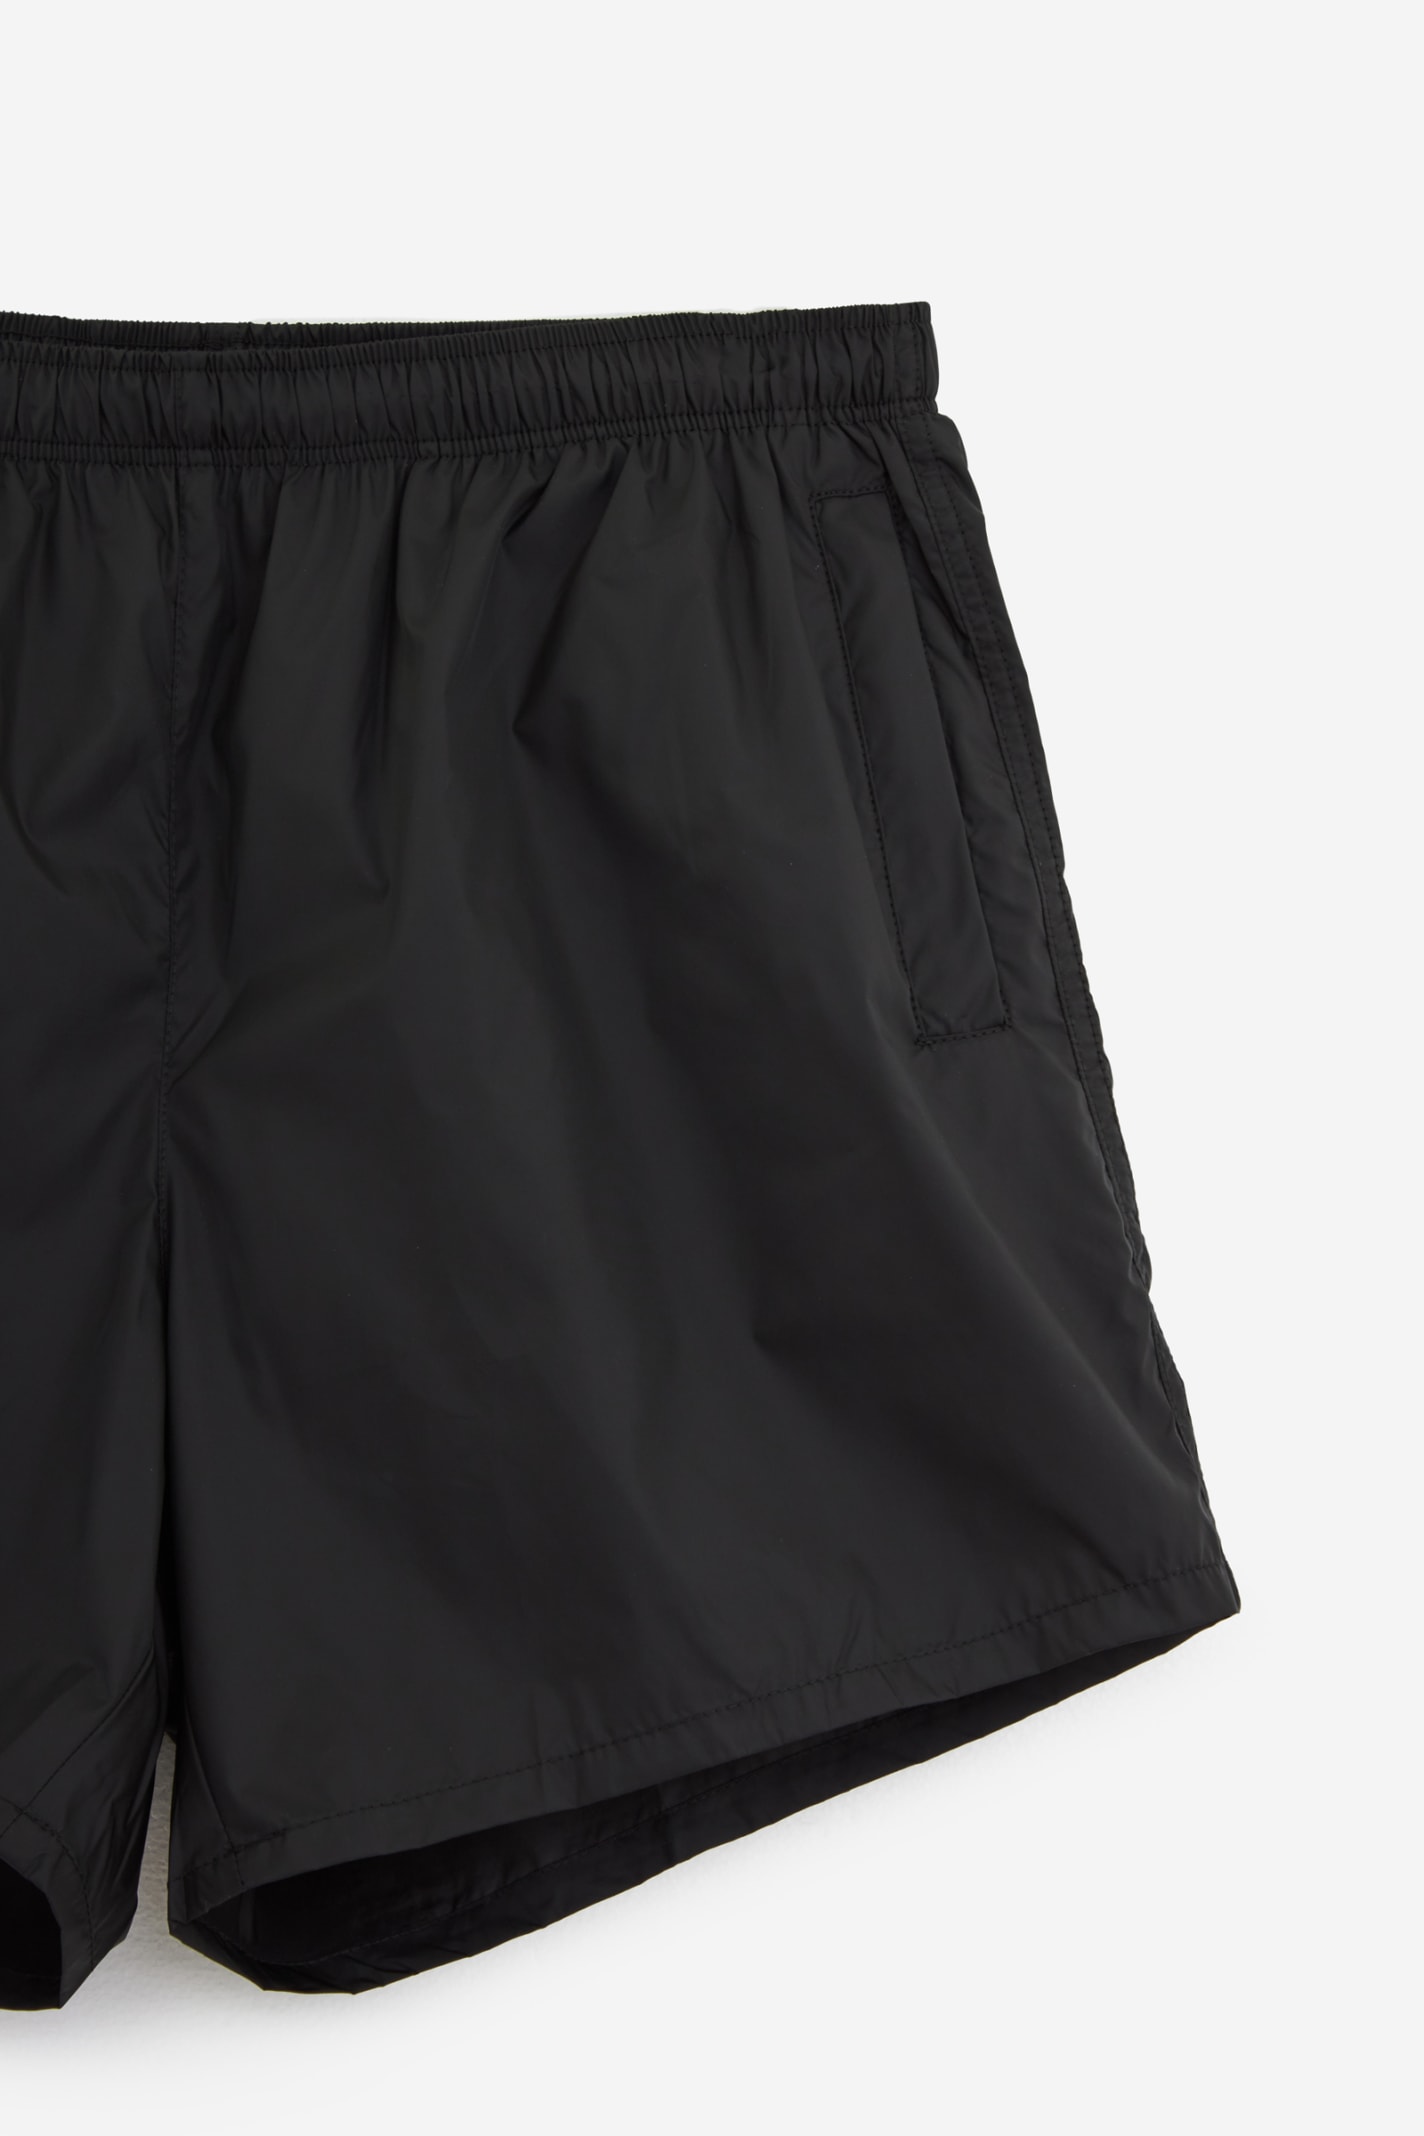 Shop Our Legacy Drape Tech Trunks Shorts In Black